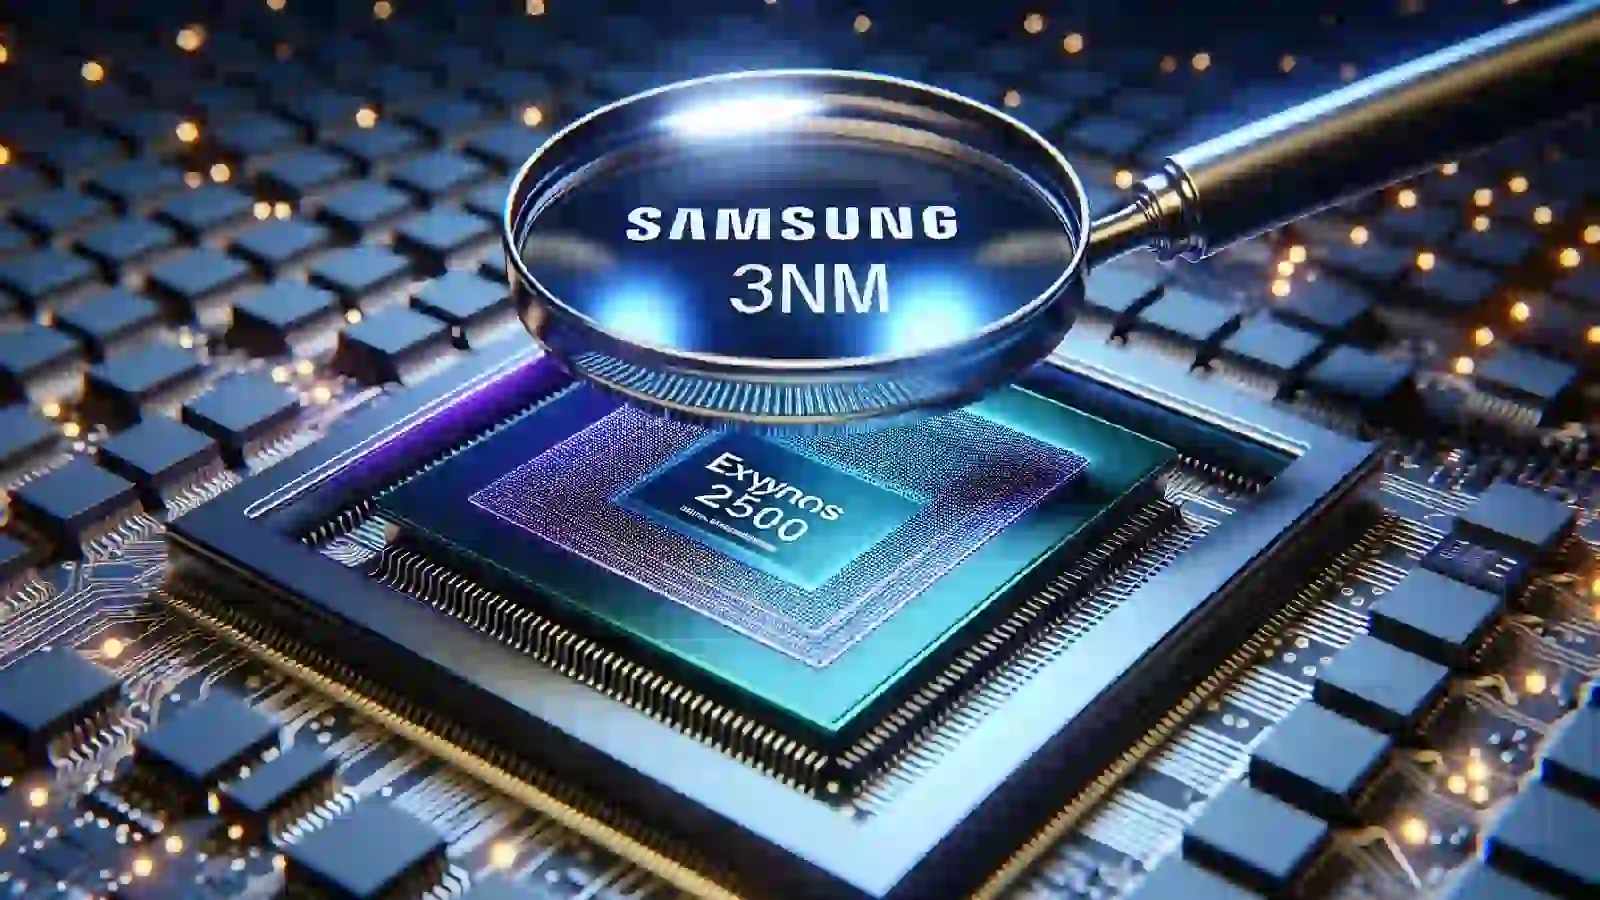 Samsung-3nm-Exynos-2500-Chip.webp